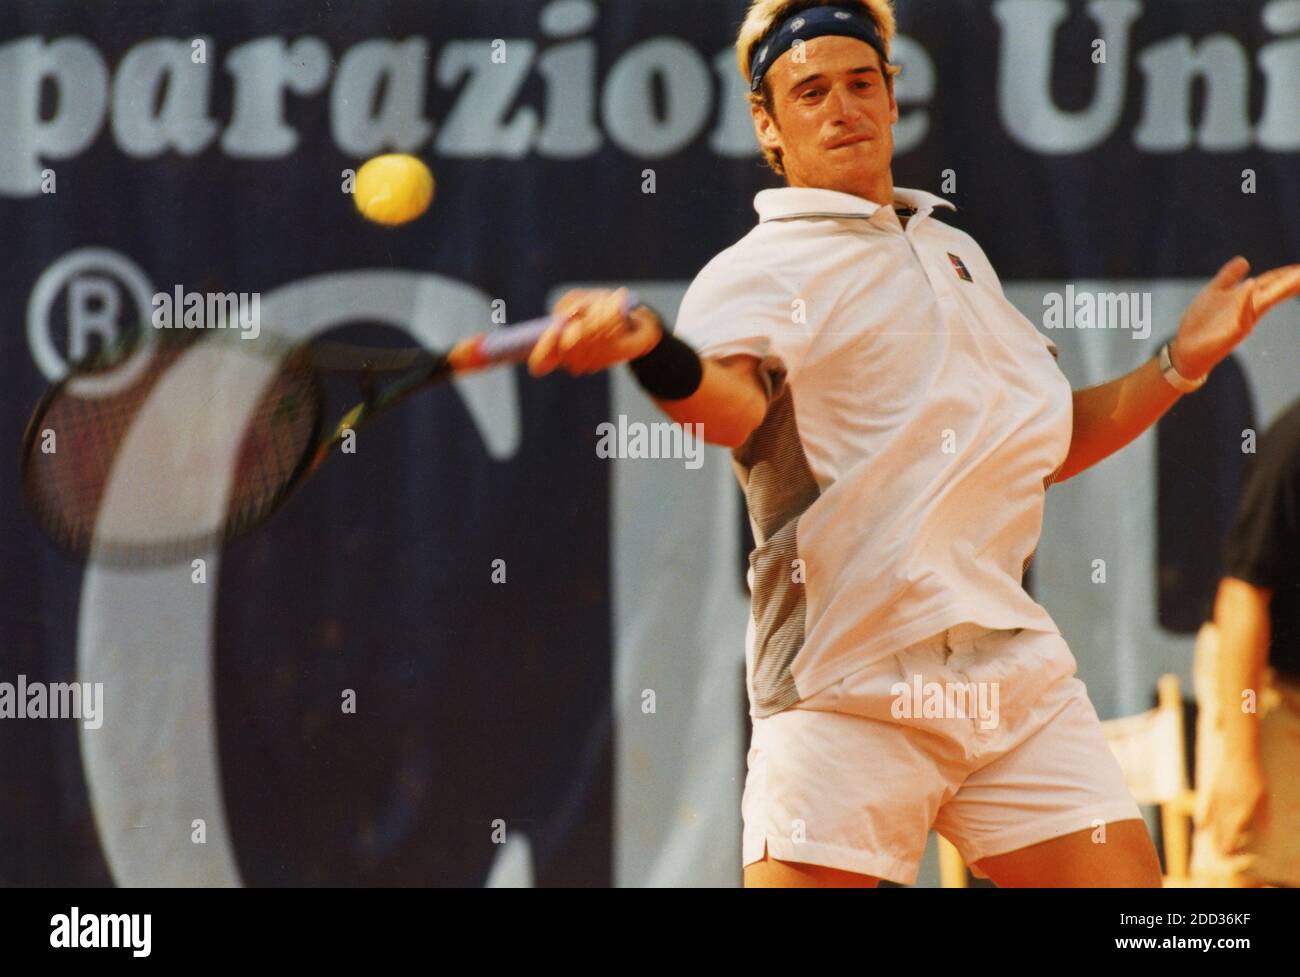 Spanish tennis player Galo Blanco, 1999 Stock Photo - Alamy